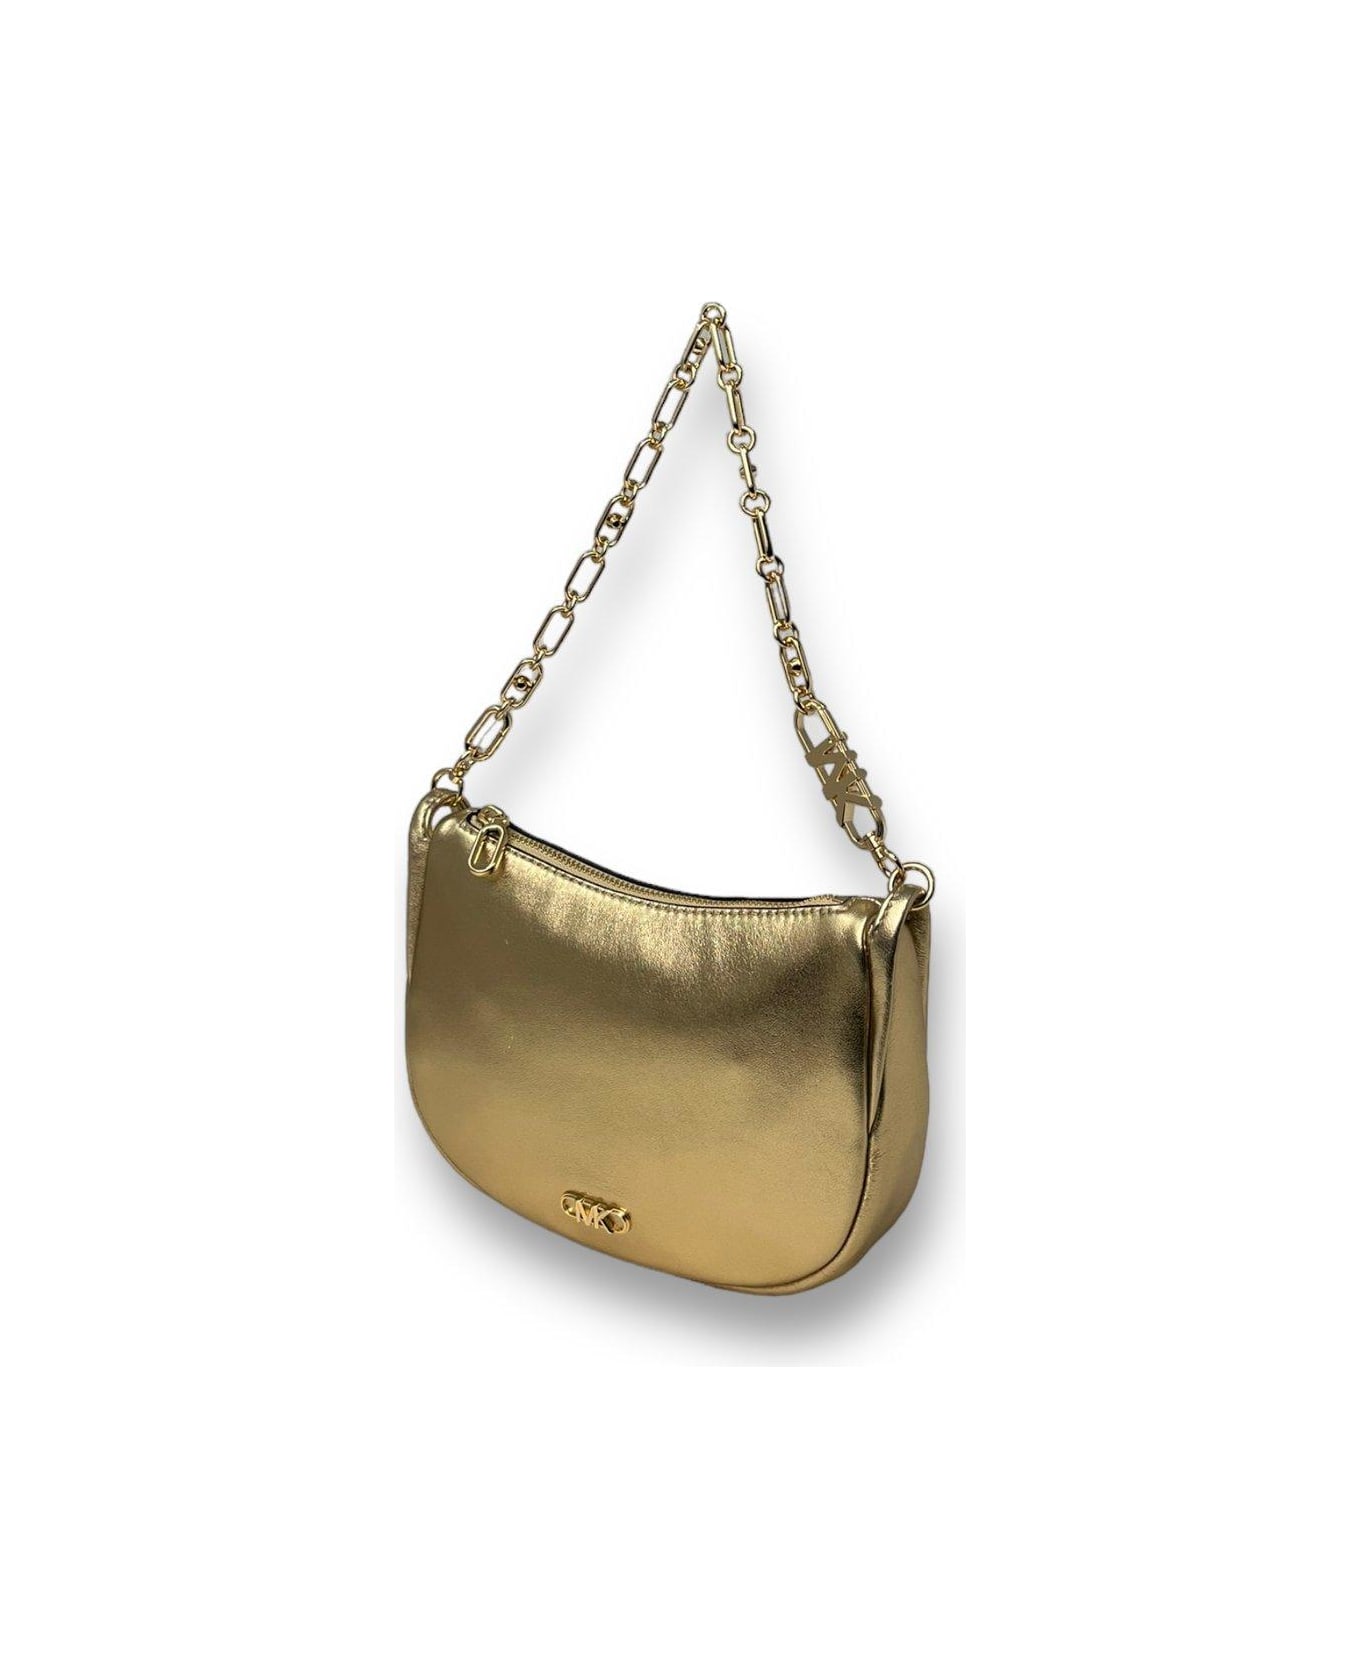 Michael Kors Kendall Small Metallic Shoulder Bag Michael Kors - GOLD トートバッグ